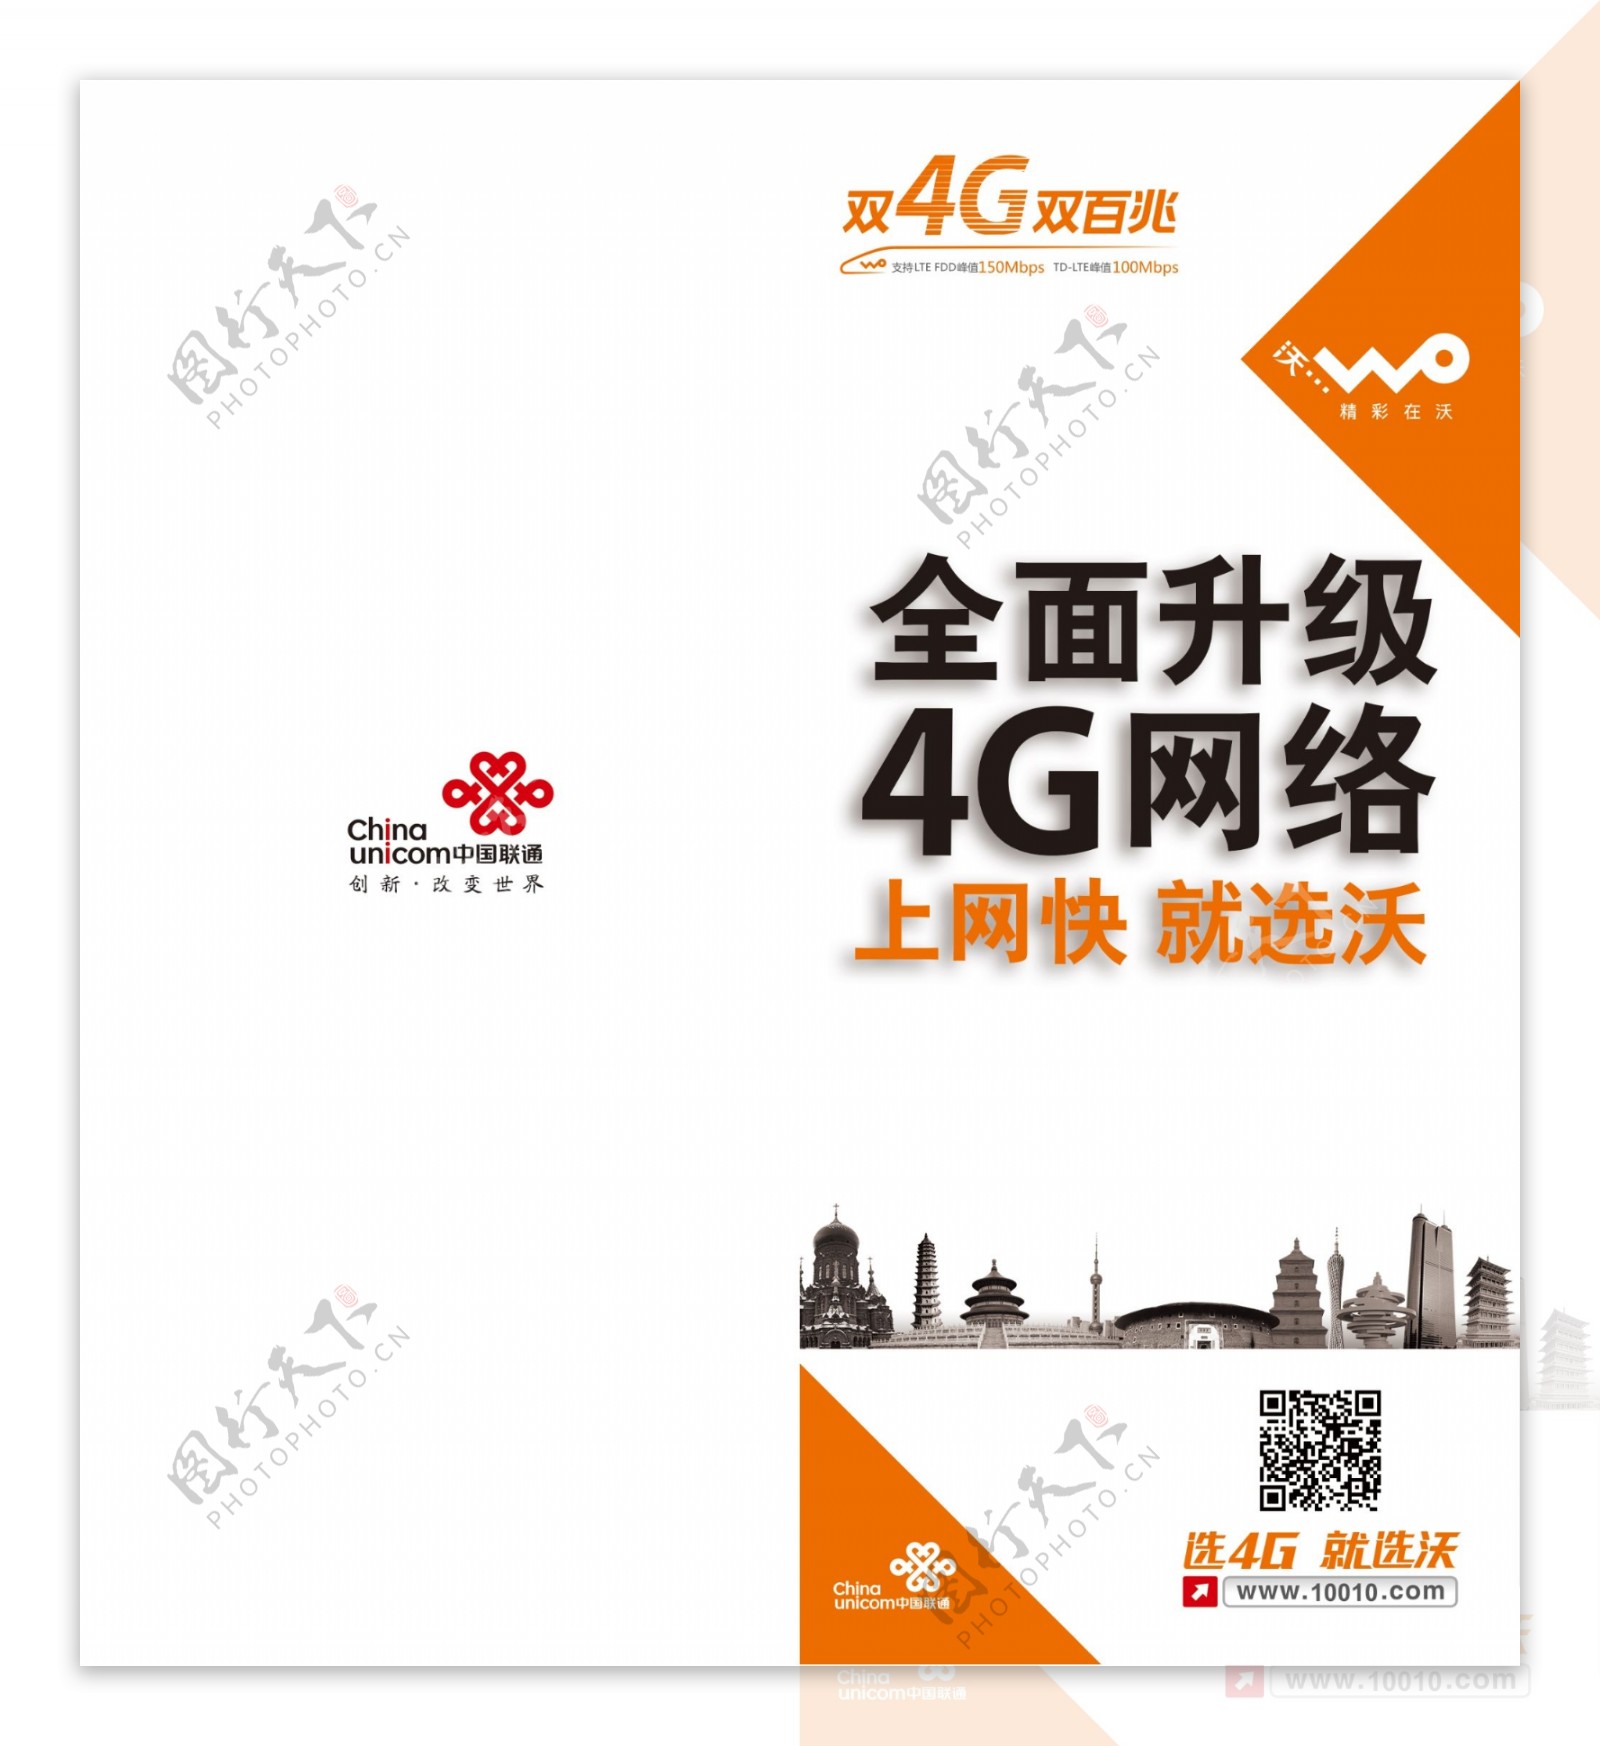 2G3G用户开放4G网络宣传画面折页